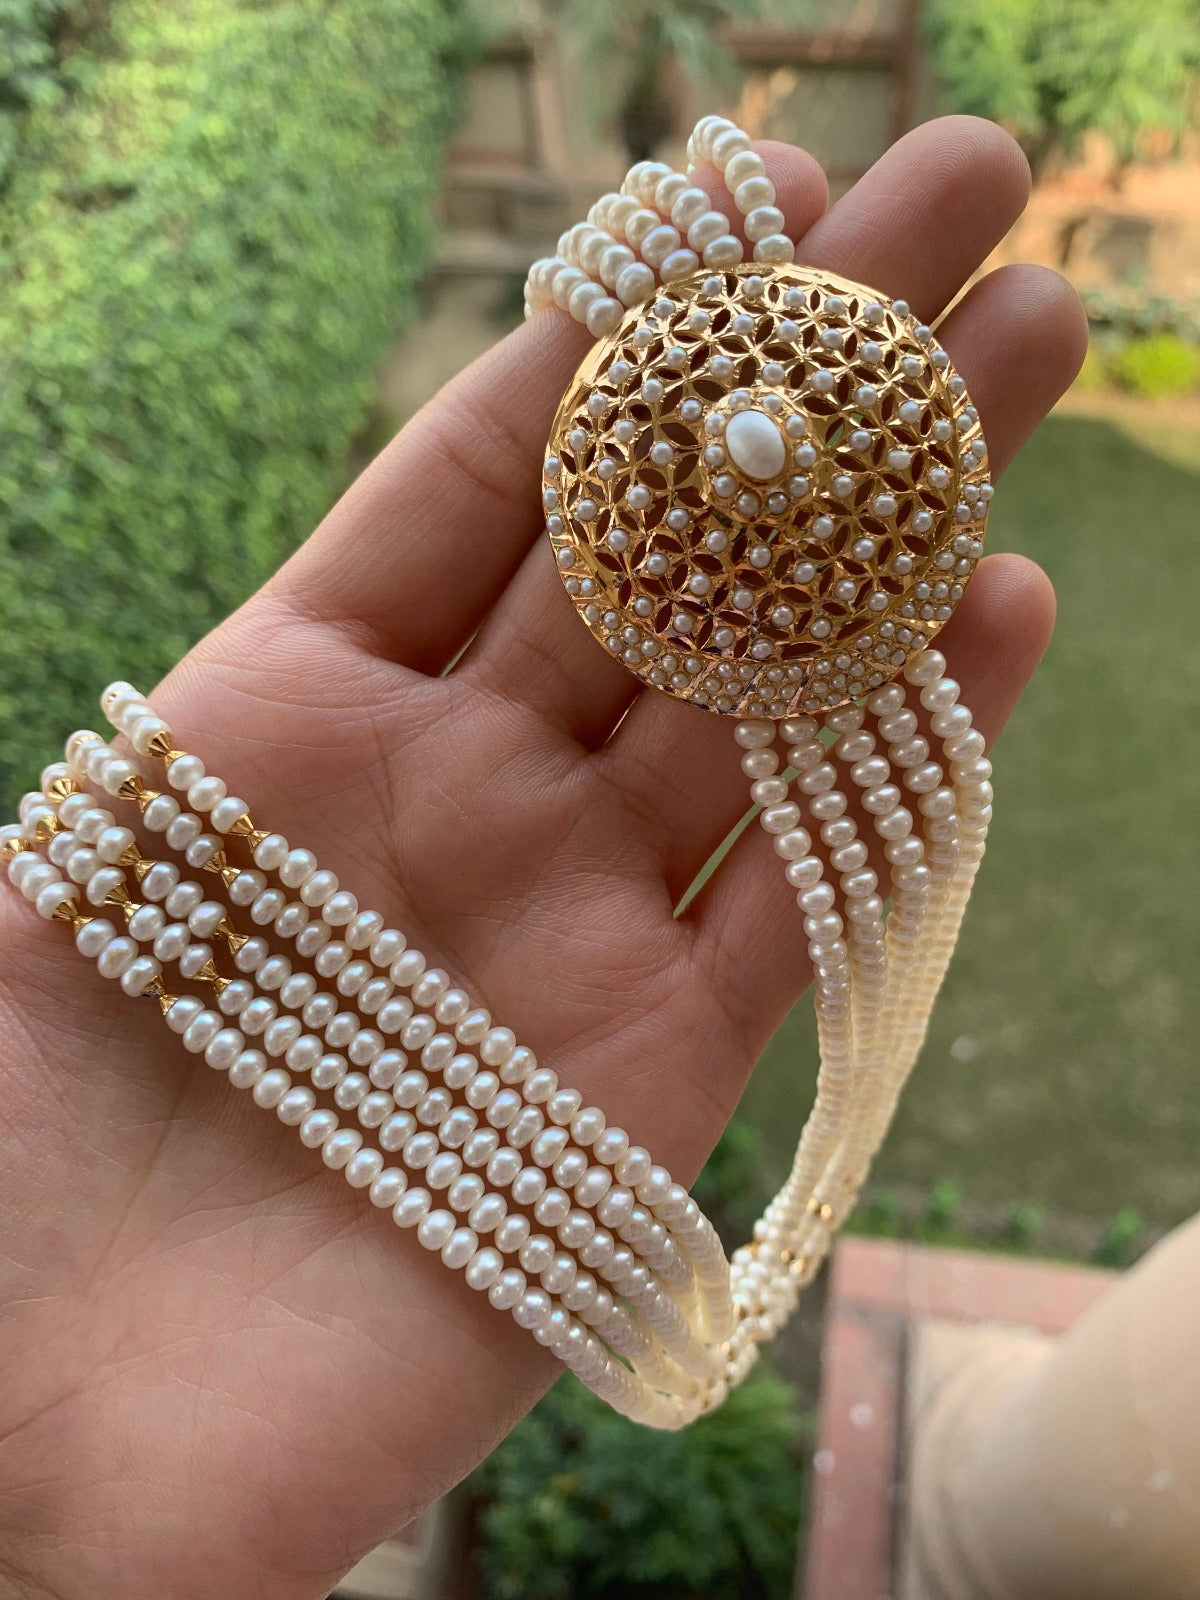 Pearl Jadau Rani Haar Necklace Set in Gold Plated Silver HR 004